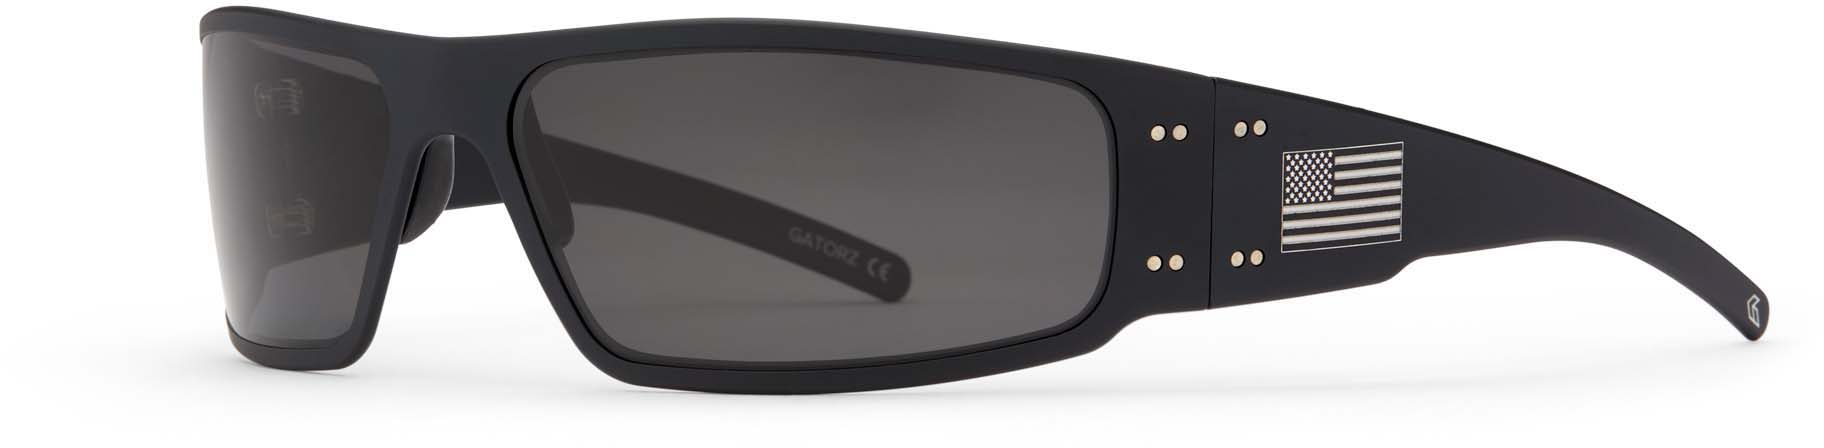 Gatorz Patriot Magnum Sunglasses with Free S&H — CampSaver